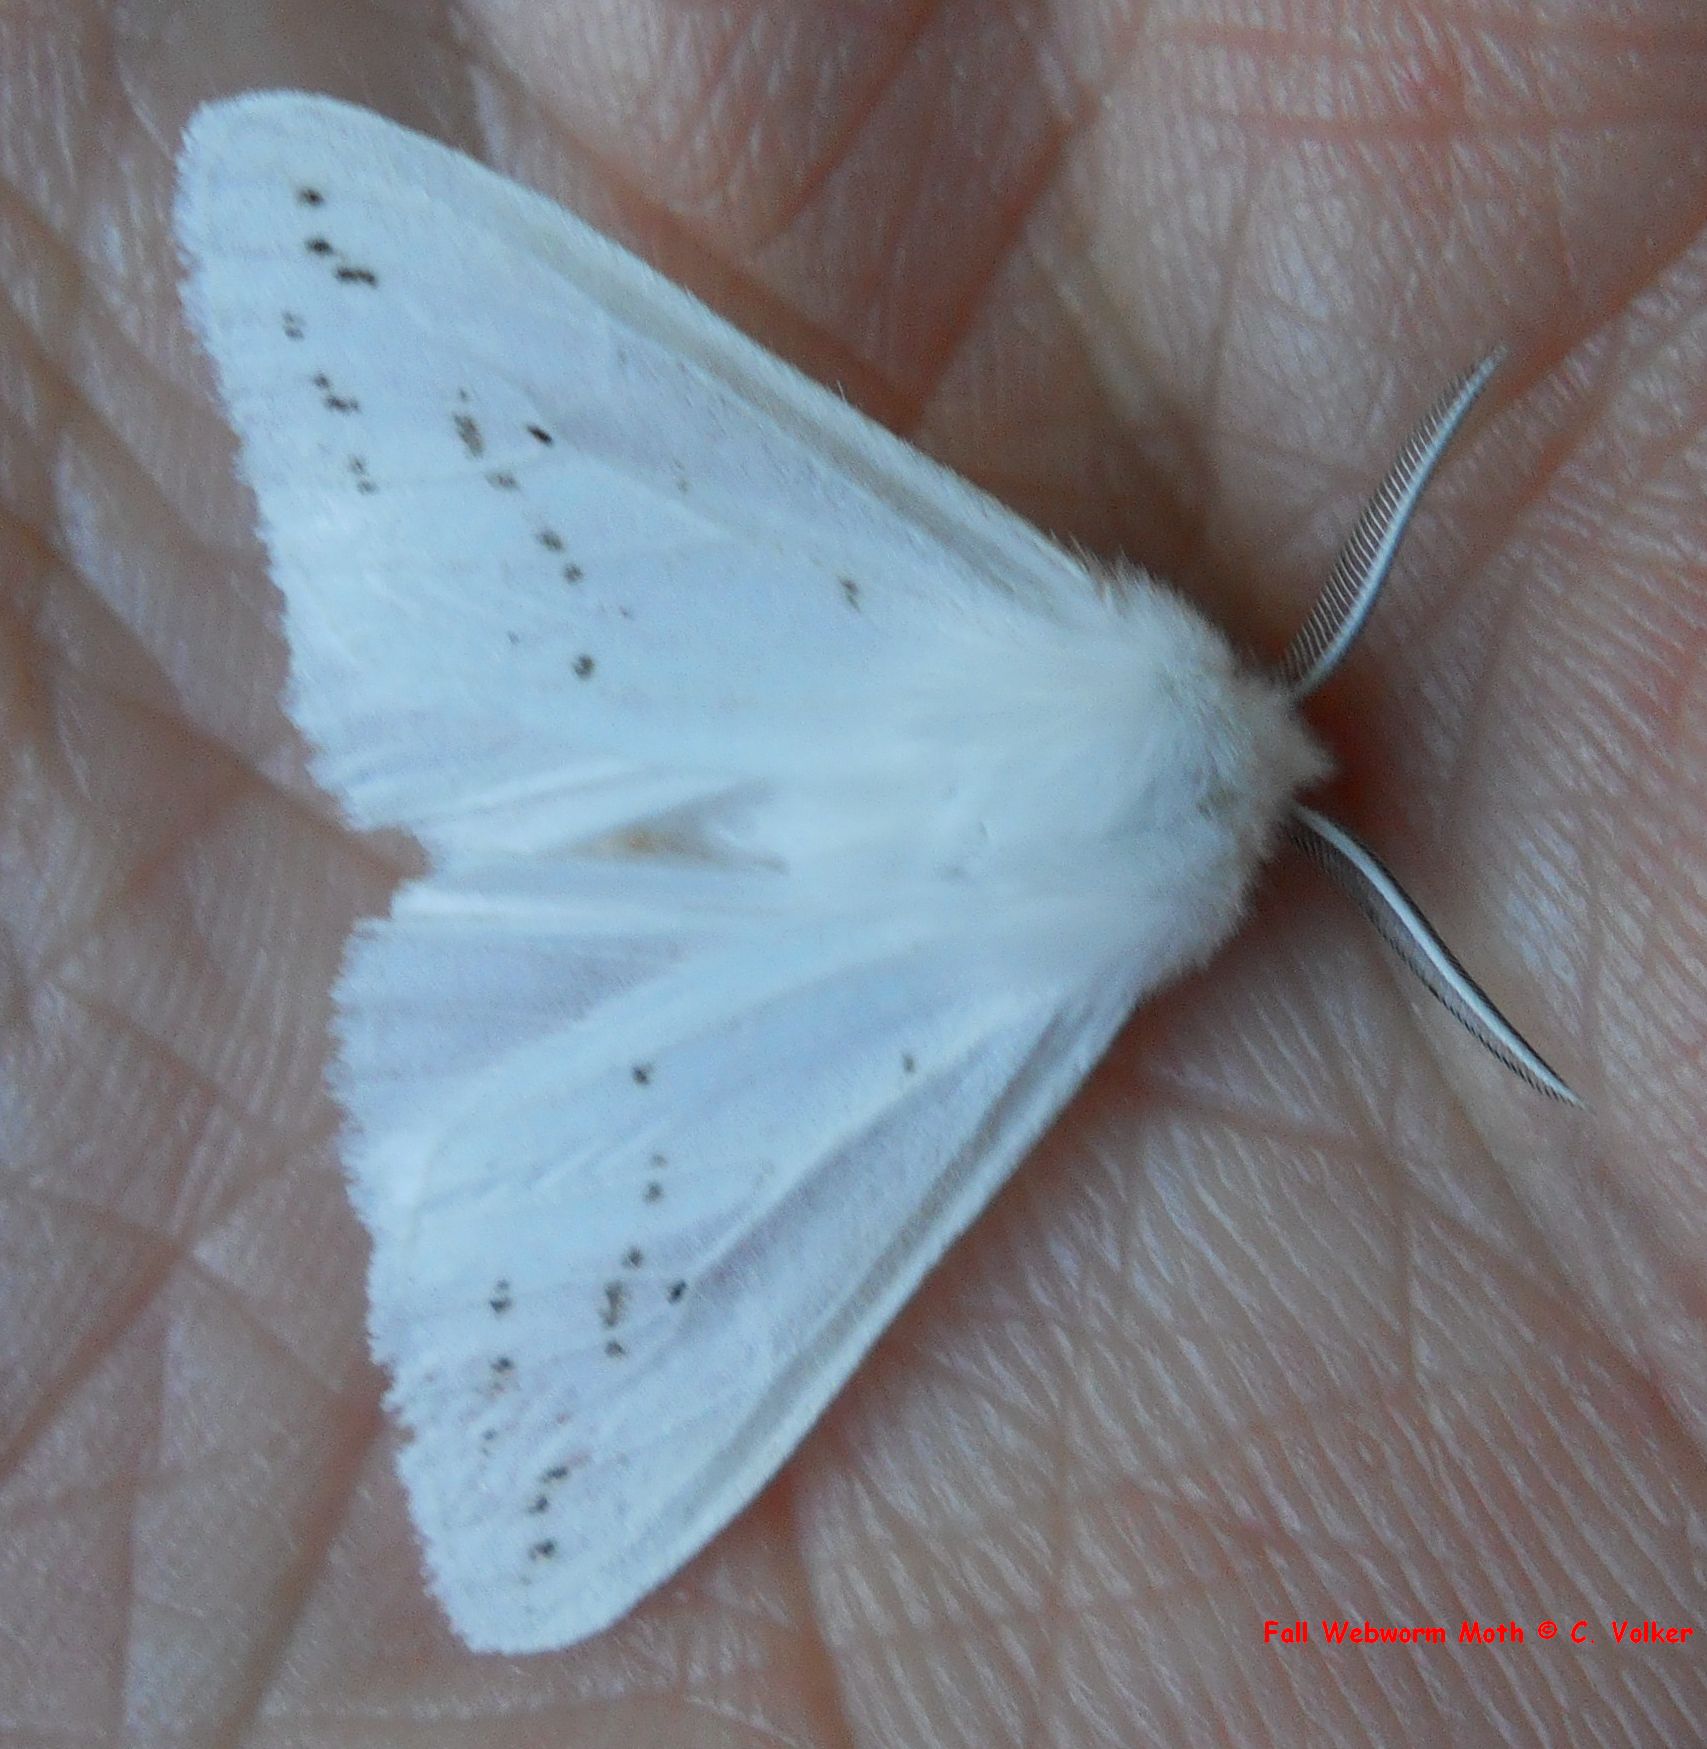 Fall Webworm Moth Hyphantria cunea (Drury, 1773) | Butterflies and ...